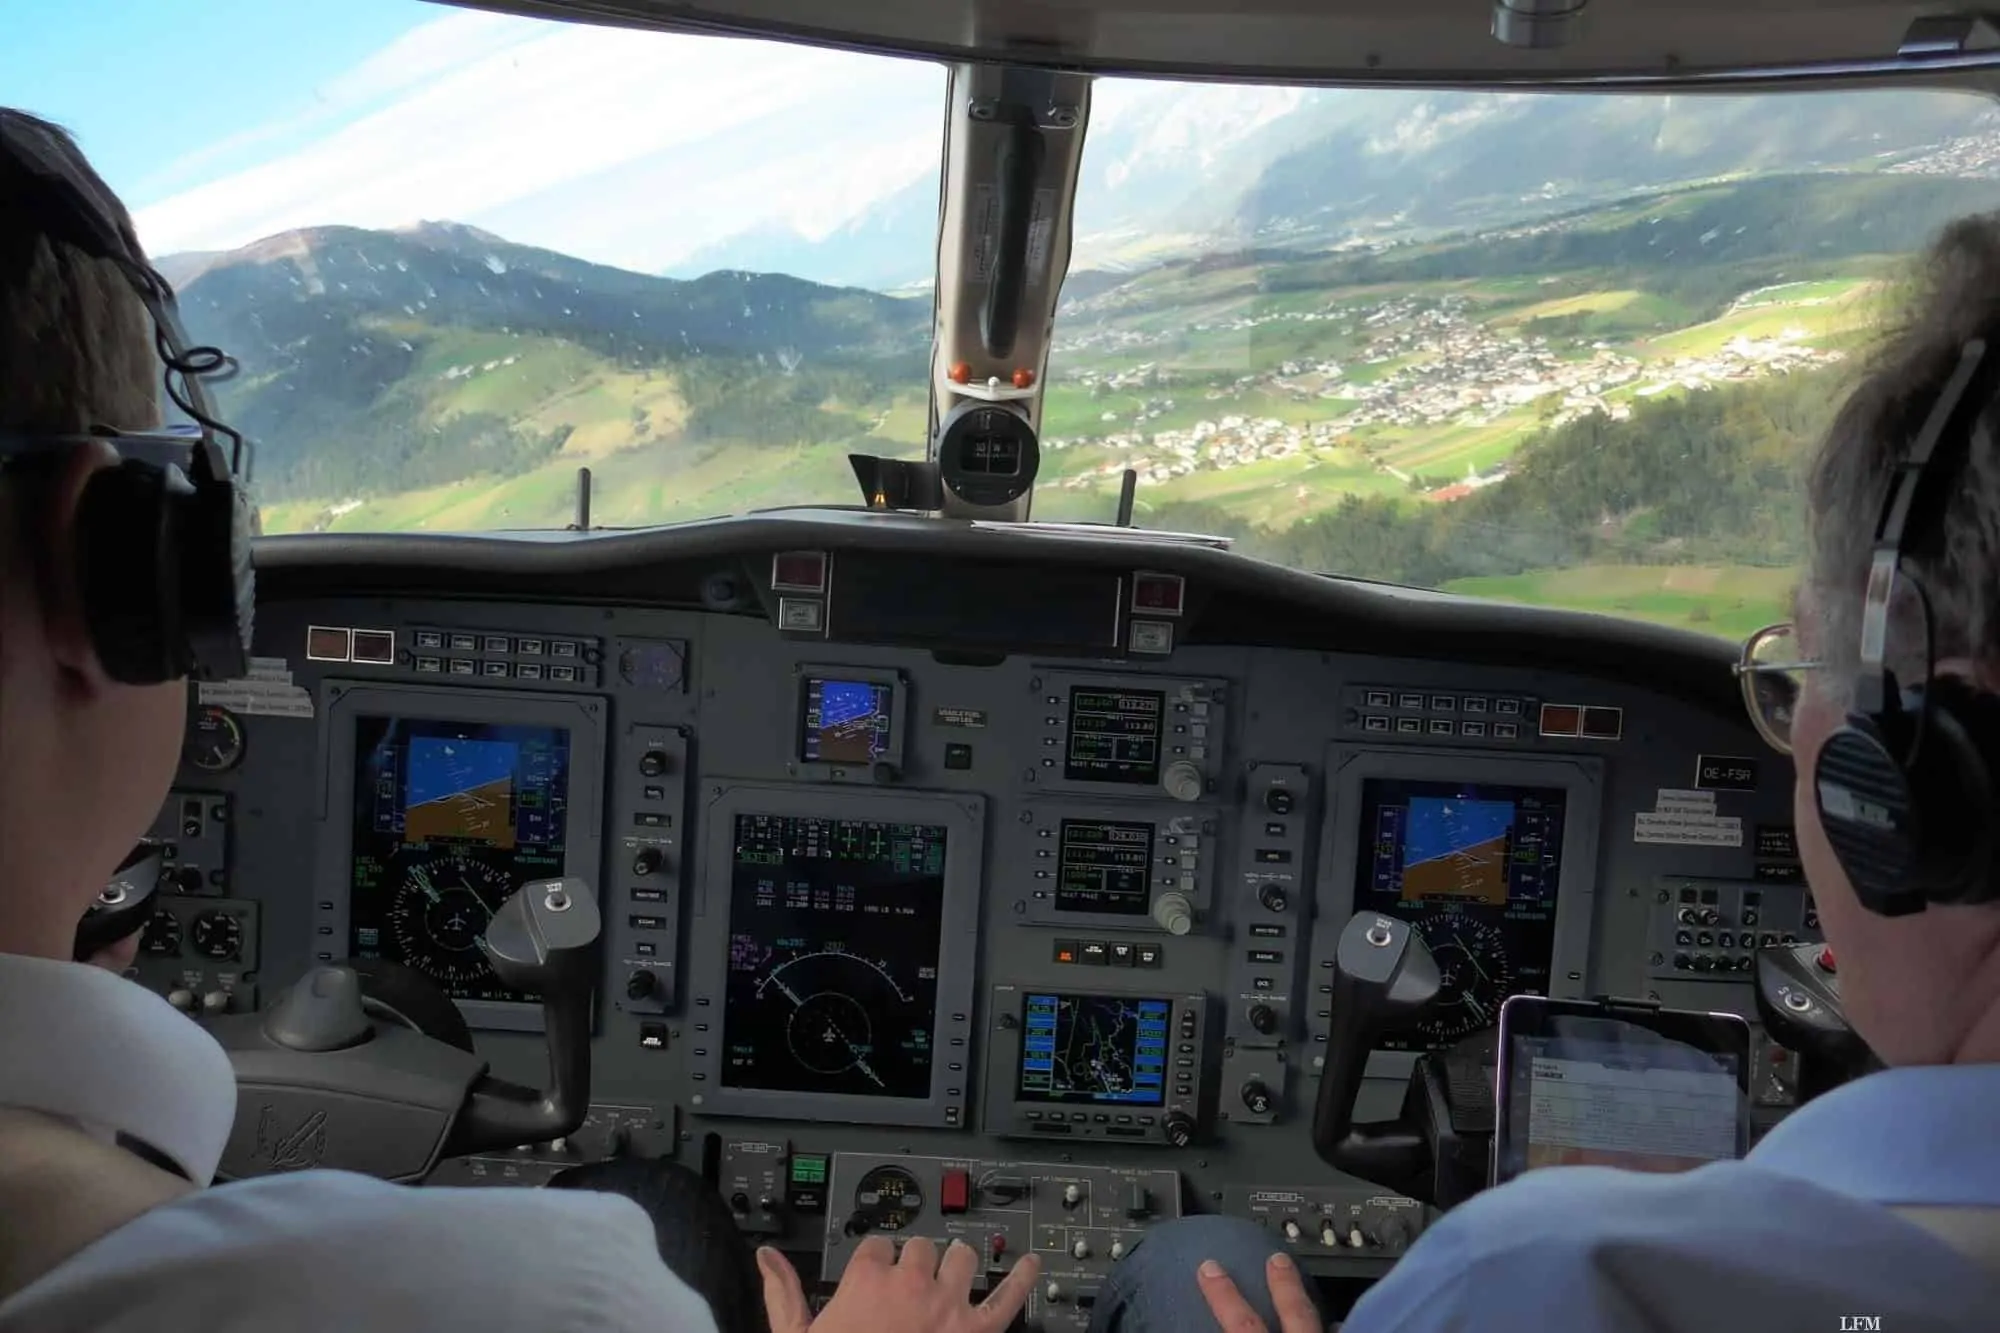 Austro Control verändert Pilotenprüfungen wegen Corona